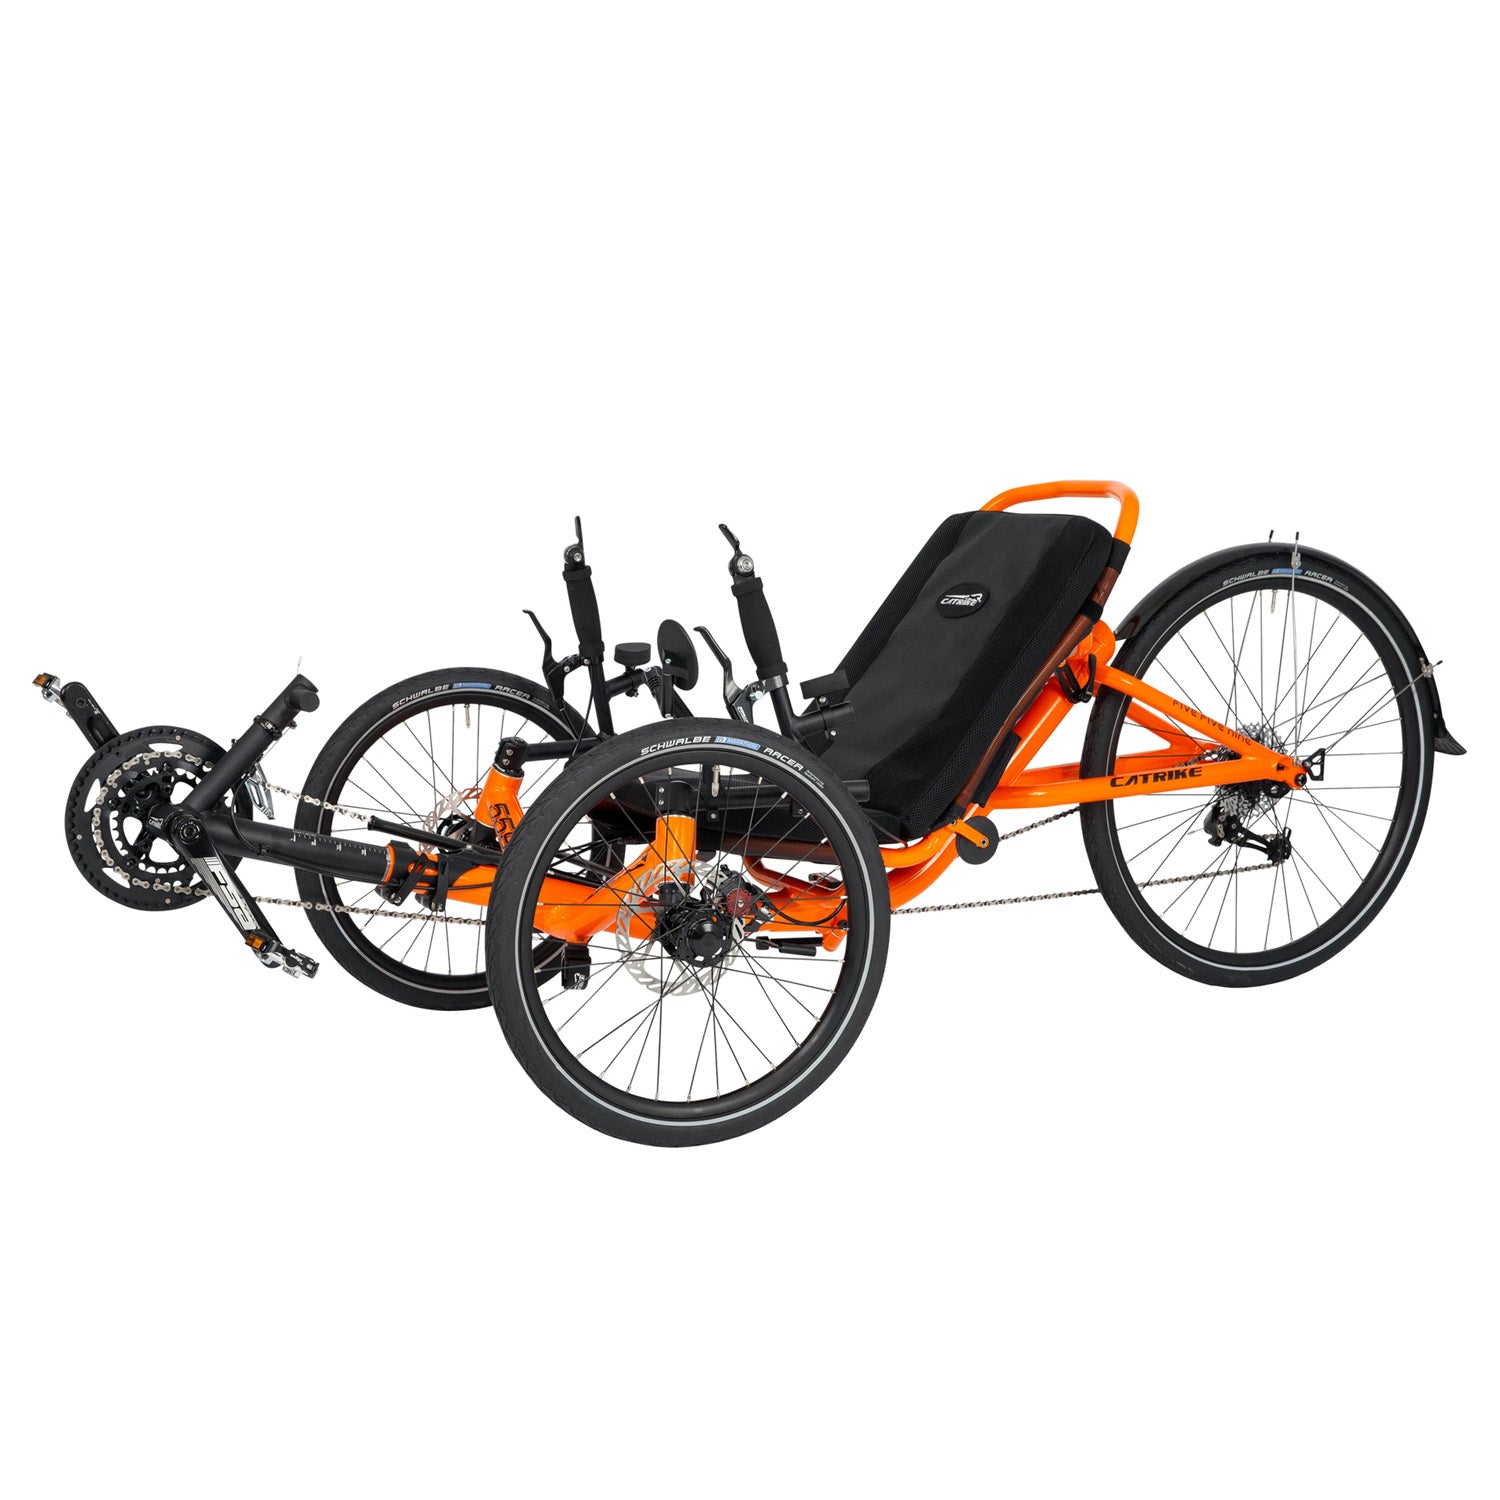 Catrike 5.5.9 Trike lef side, Atomic Orange, Bixby Bicycle